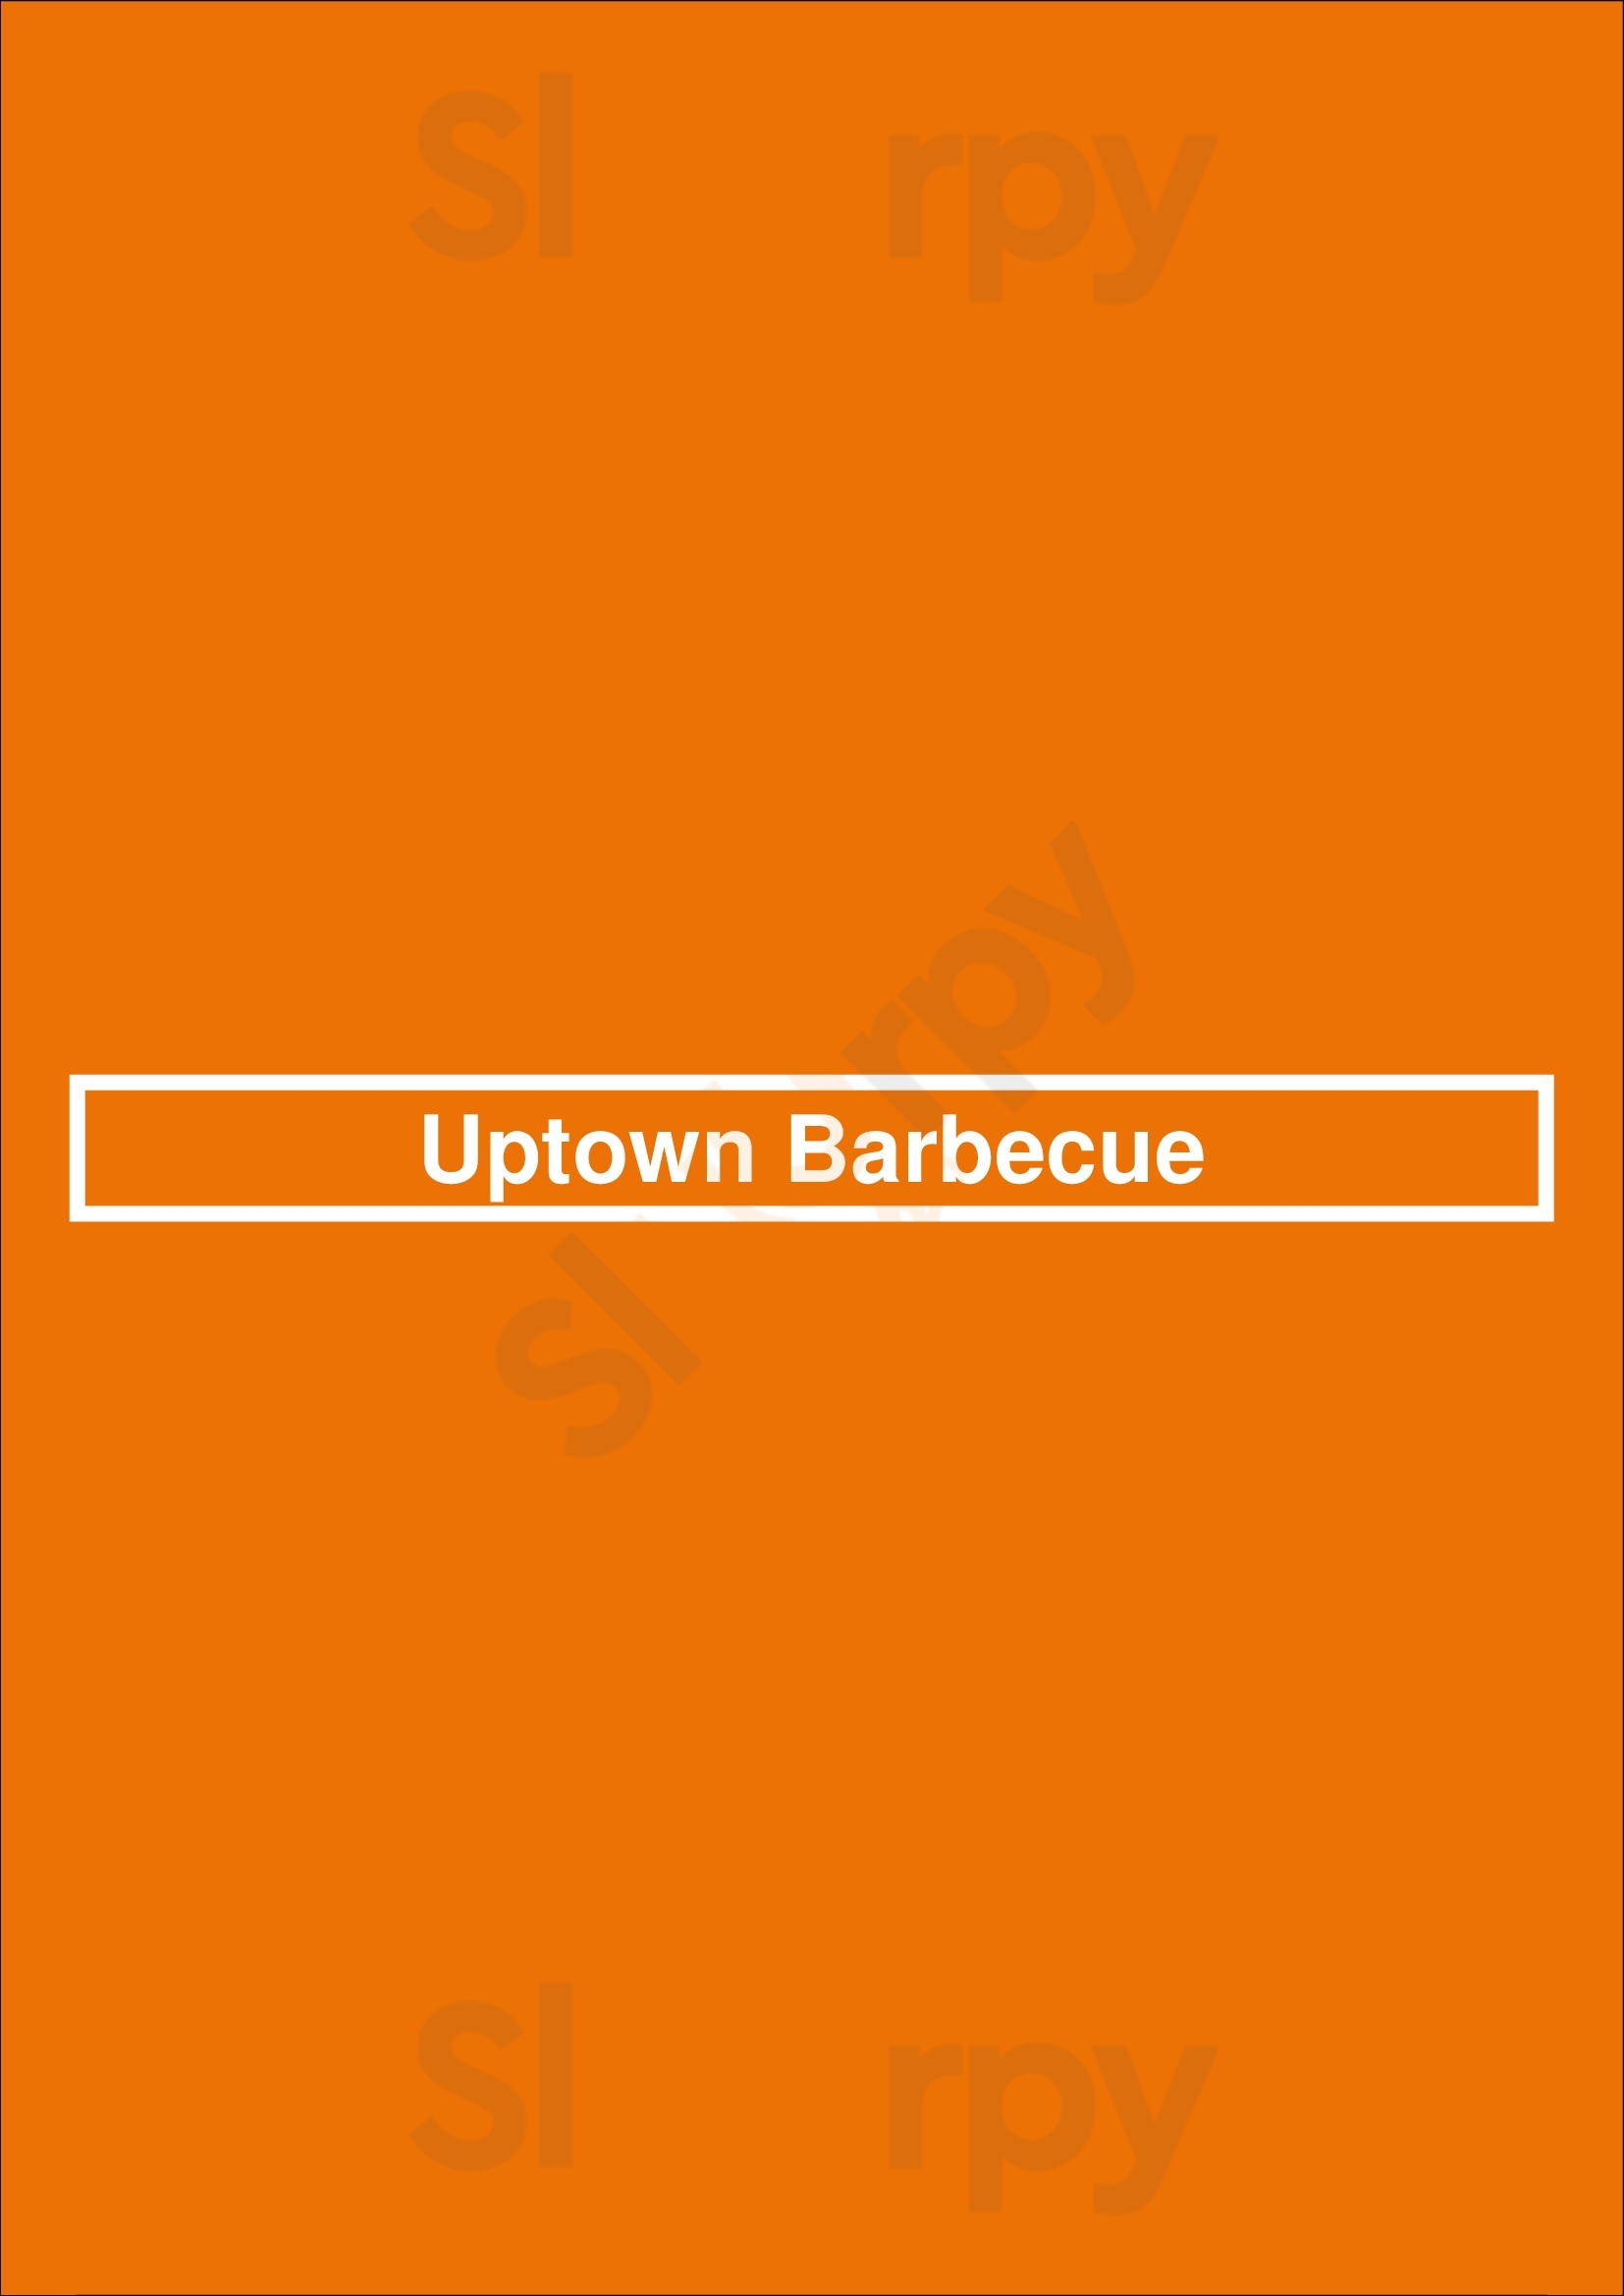 Uptown Barbecue Detroit Menu - 1